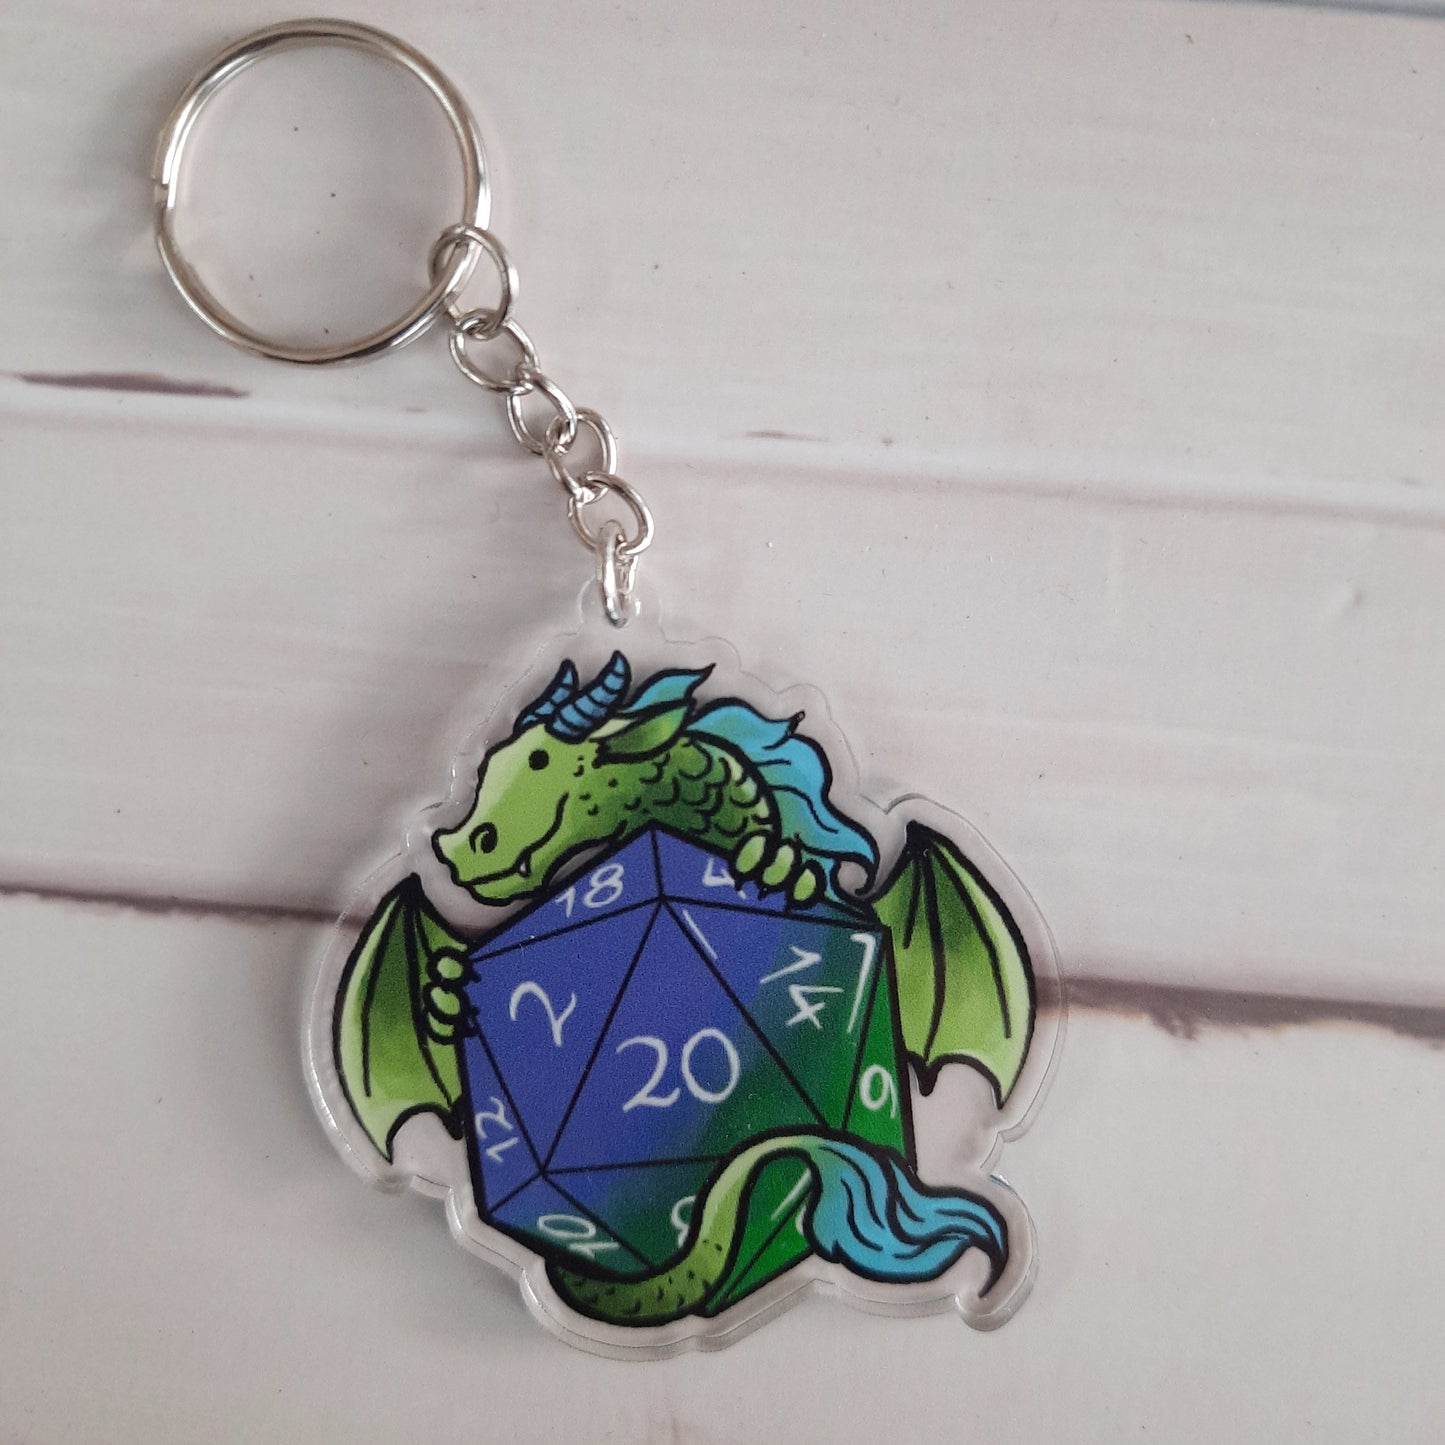 Acrylic keychain "D20 Dragon"